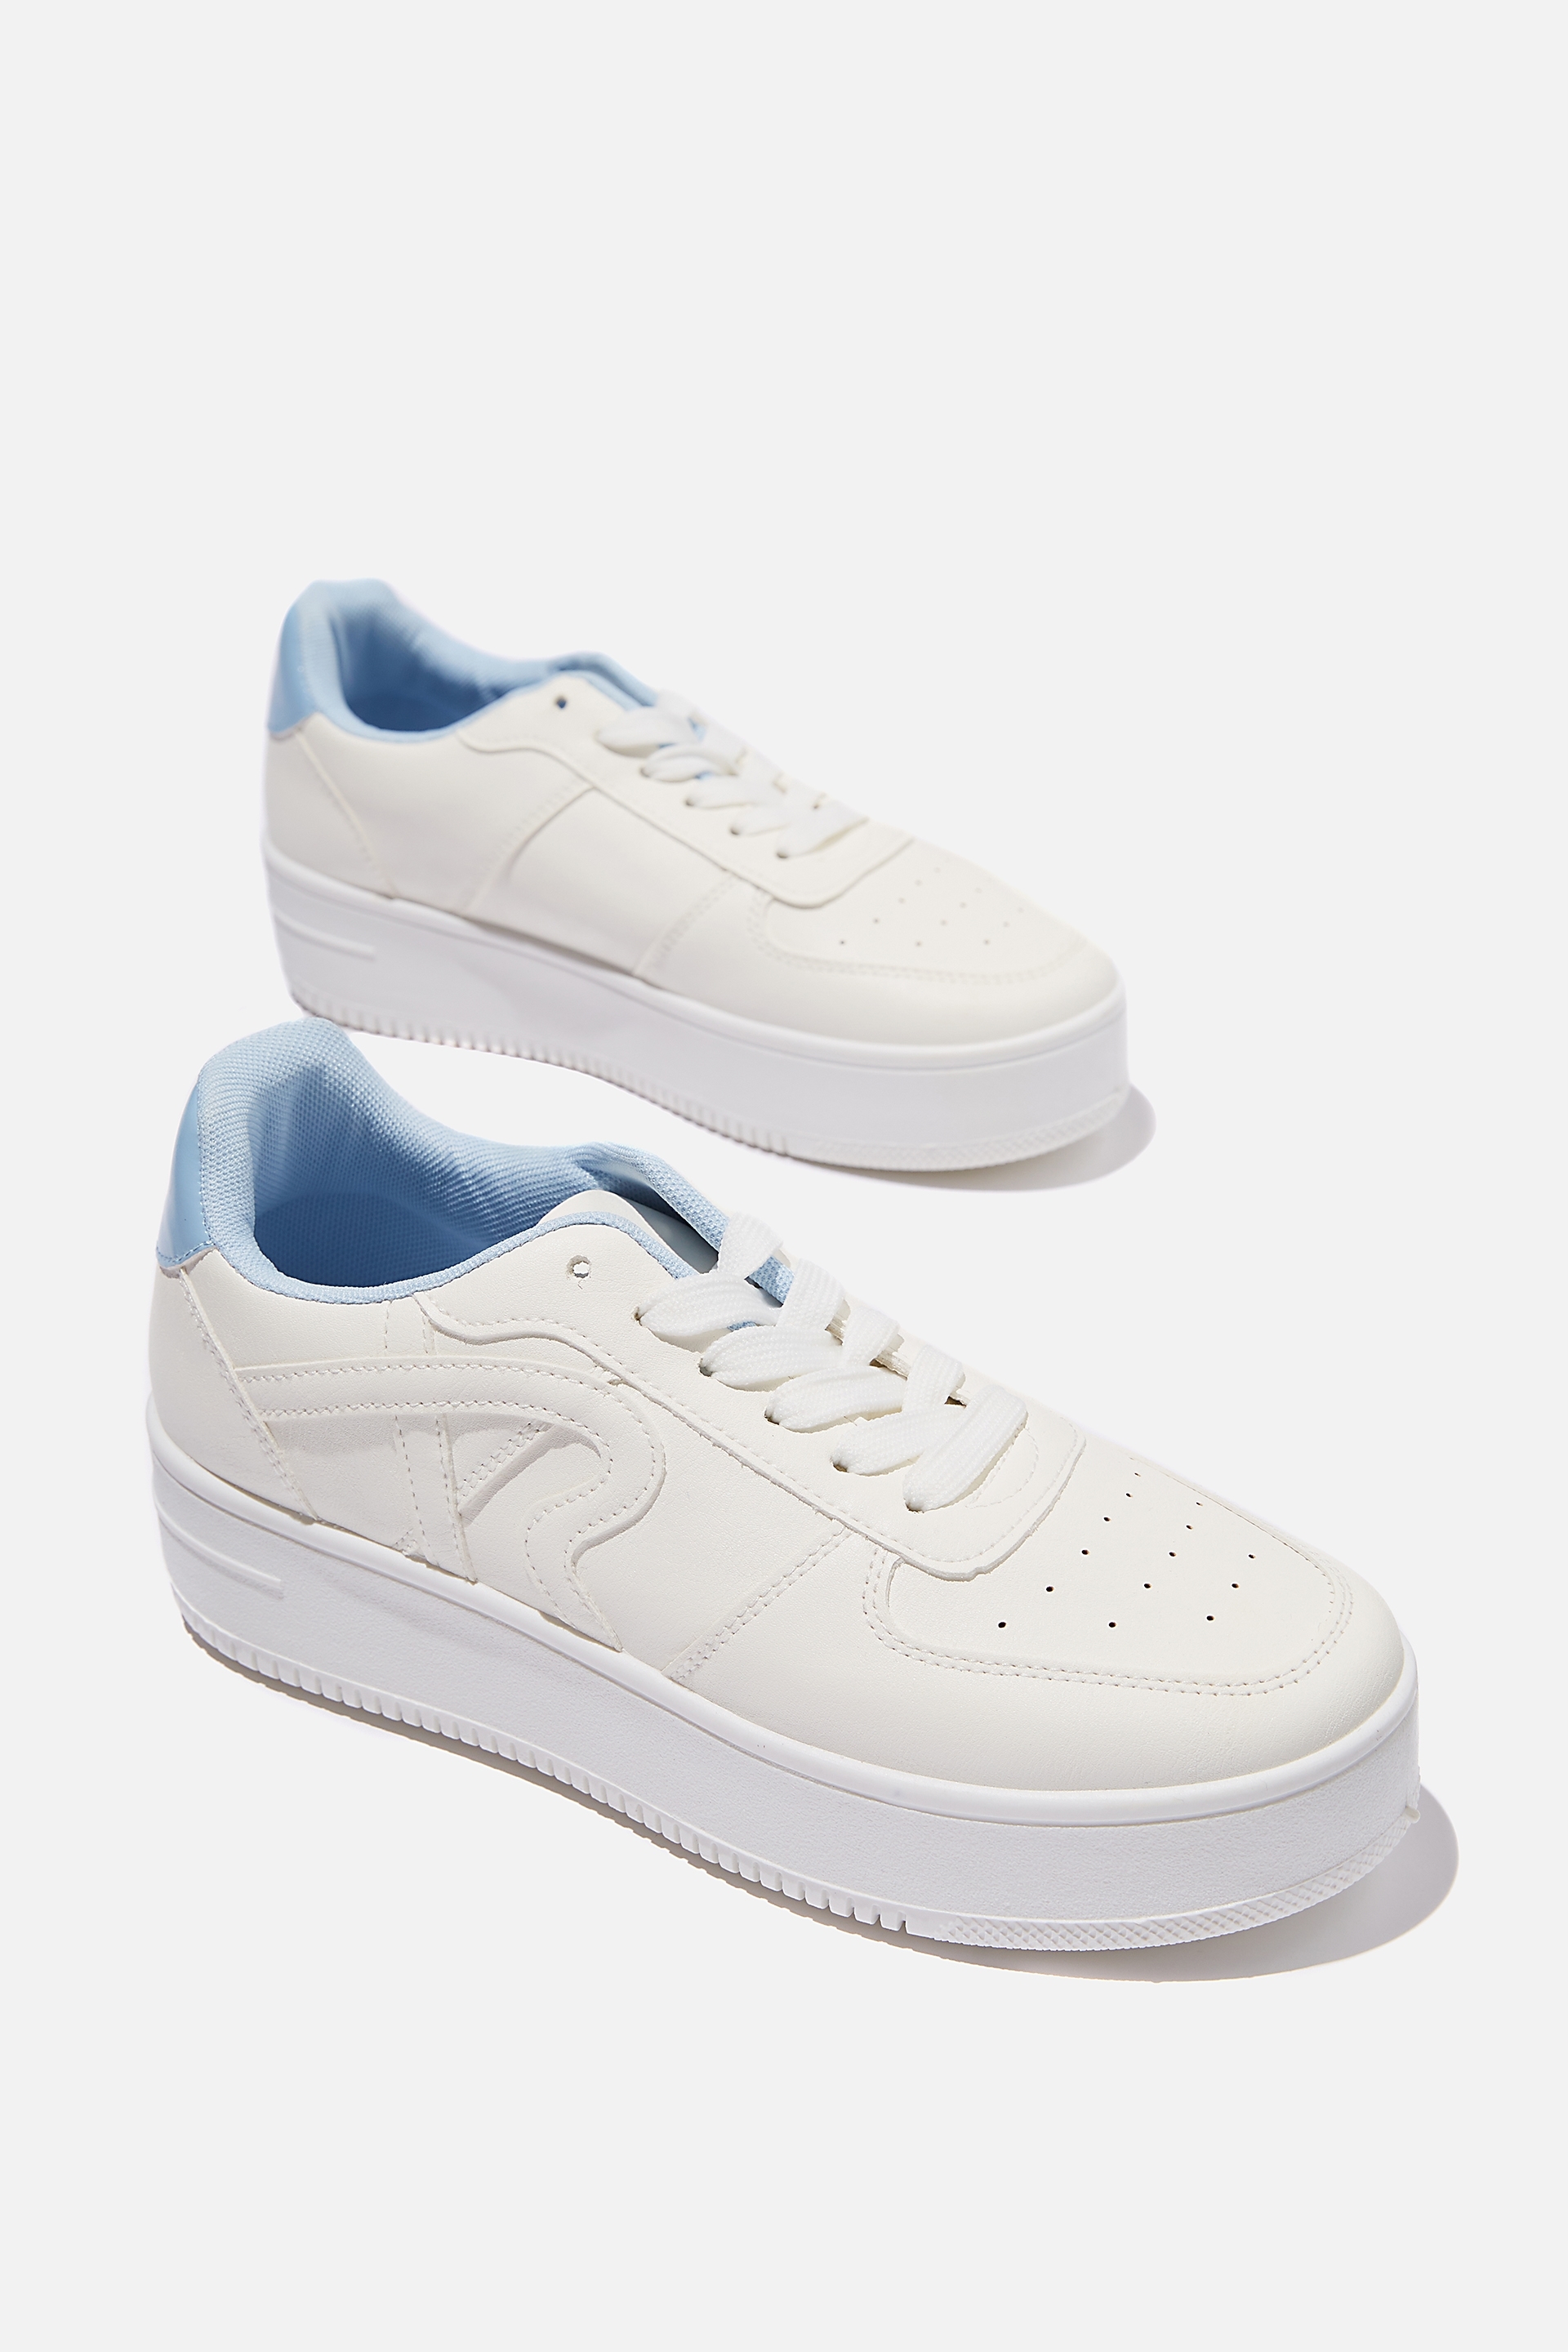 Rubi - Lexi Platform Sneaker - White blue multi